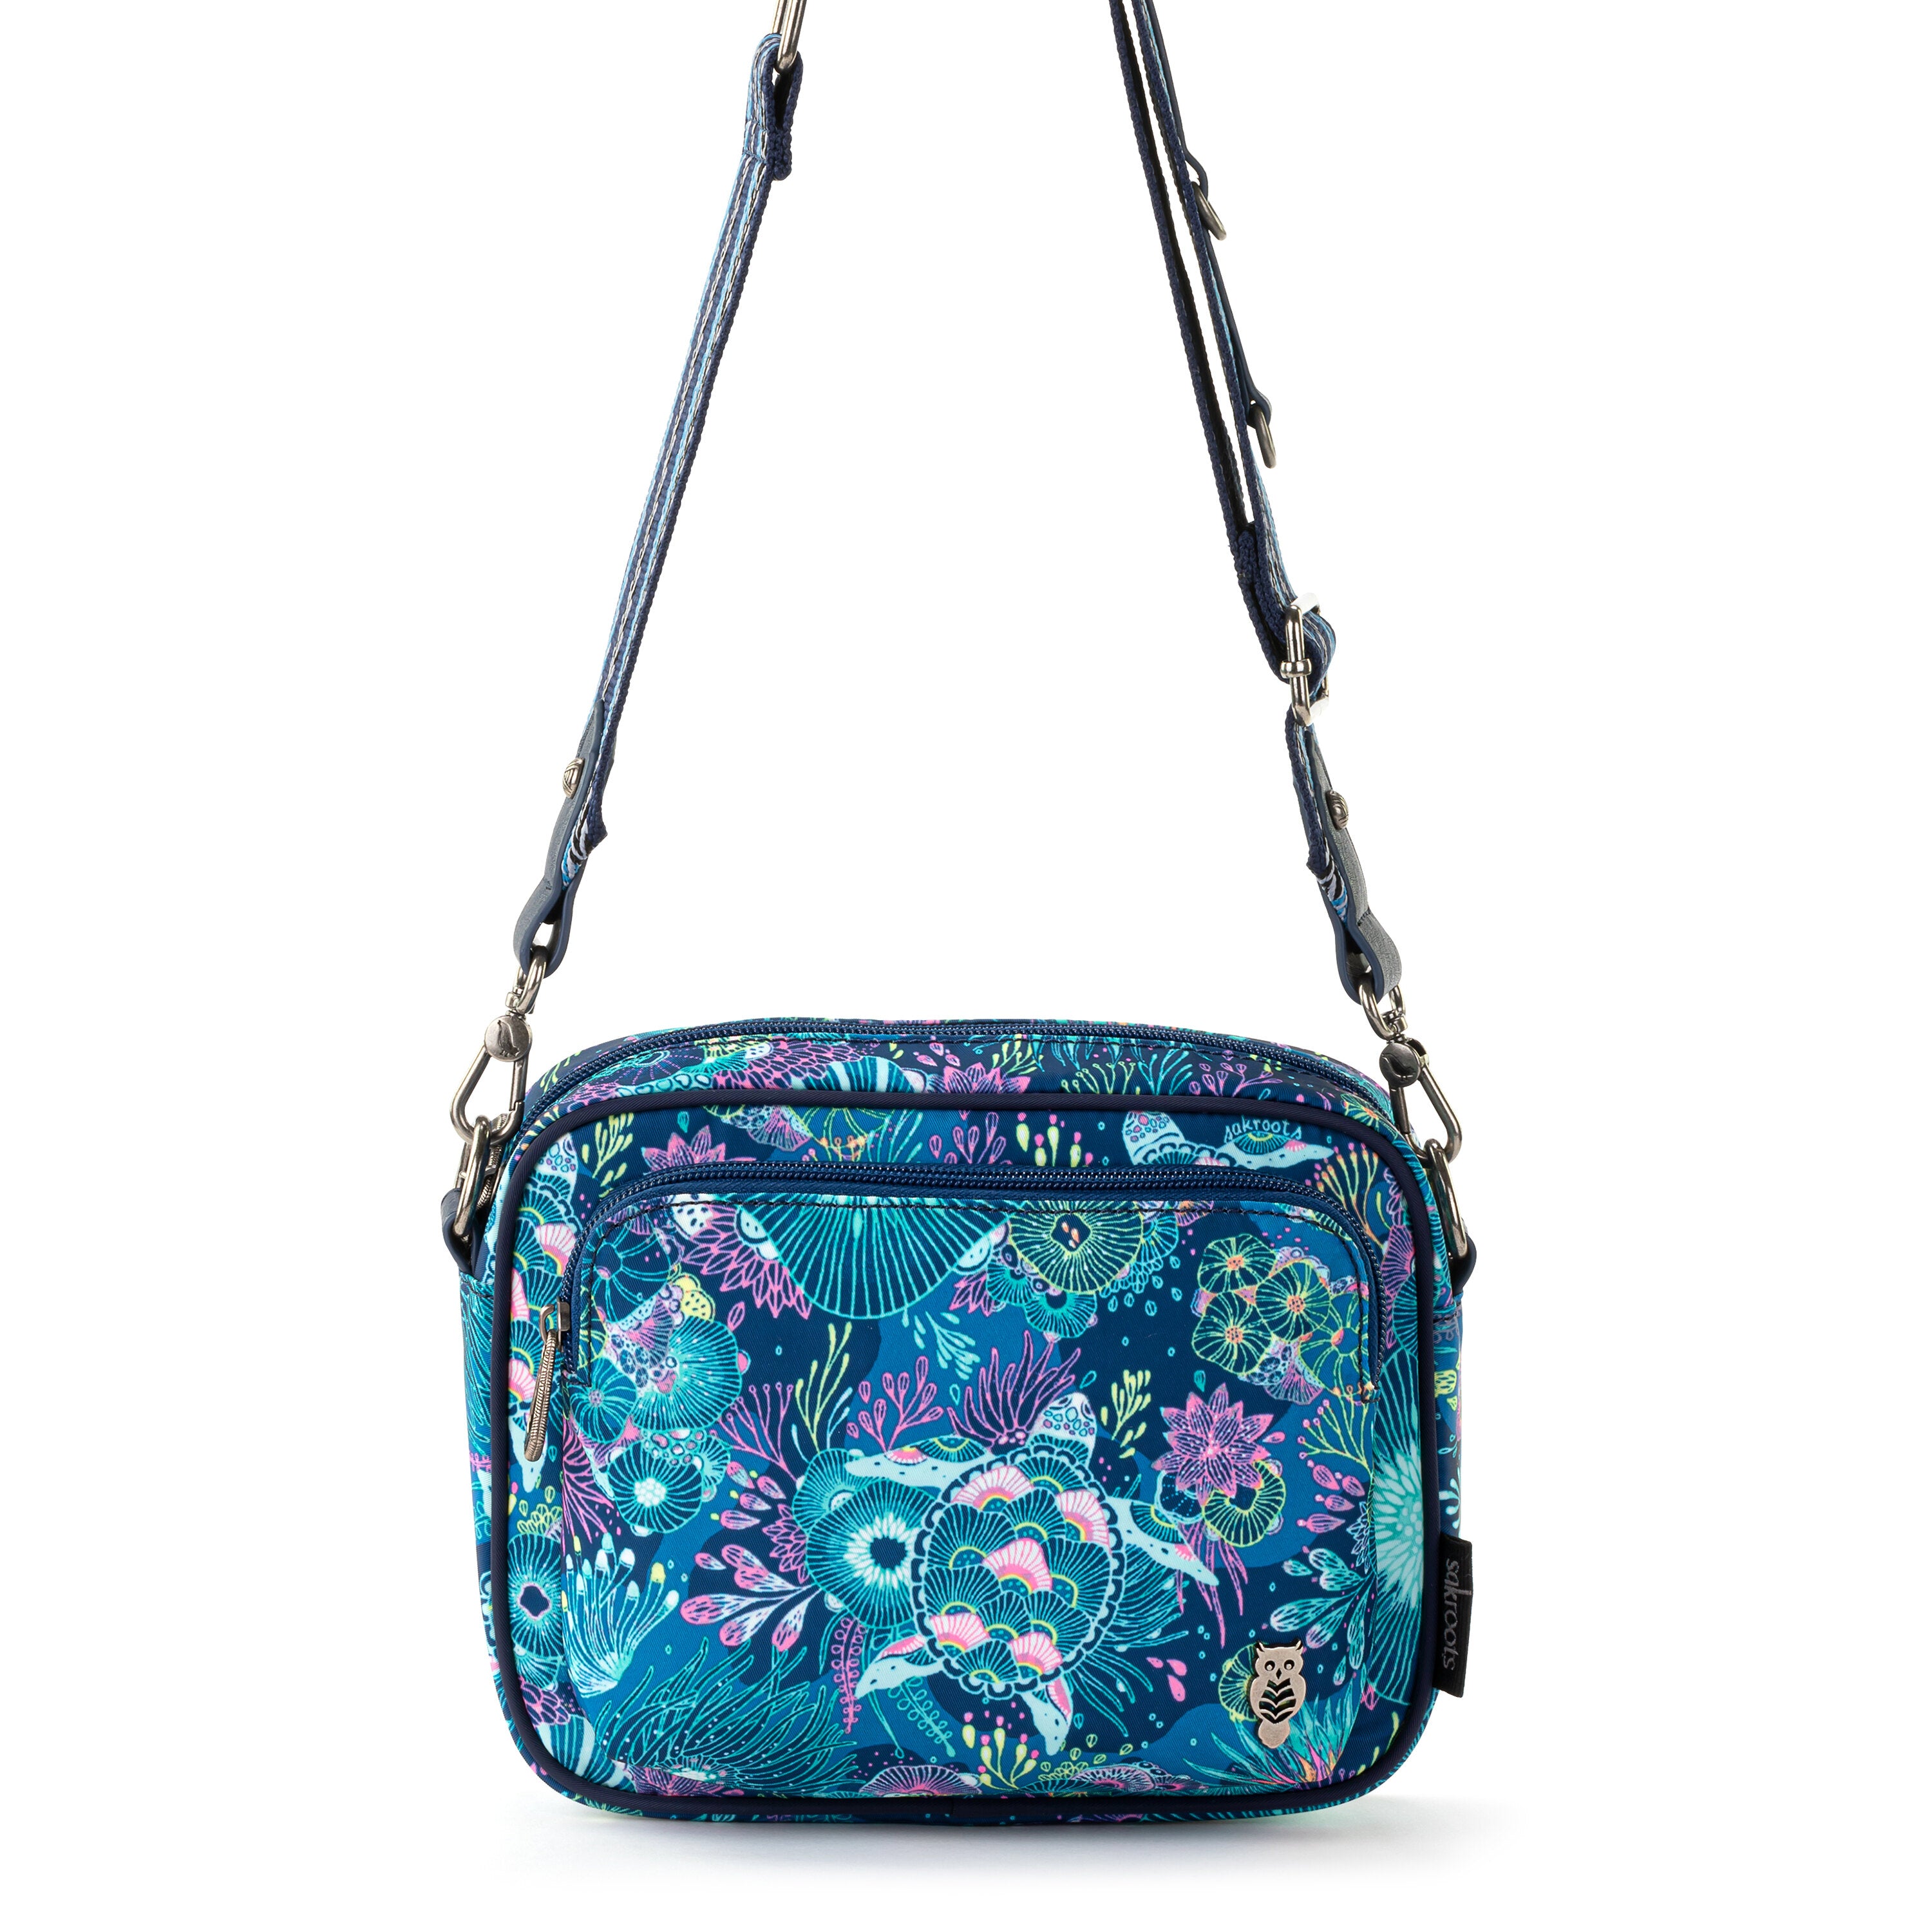 Sakroots Women's New Adventure Willow Hobo Travel Shoulder Bag, Ruby  Wanderlust, One Size : Amazon.in: Shoes & Handbags